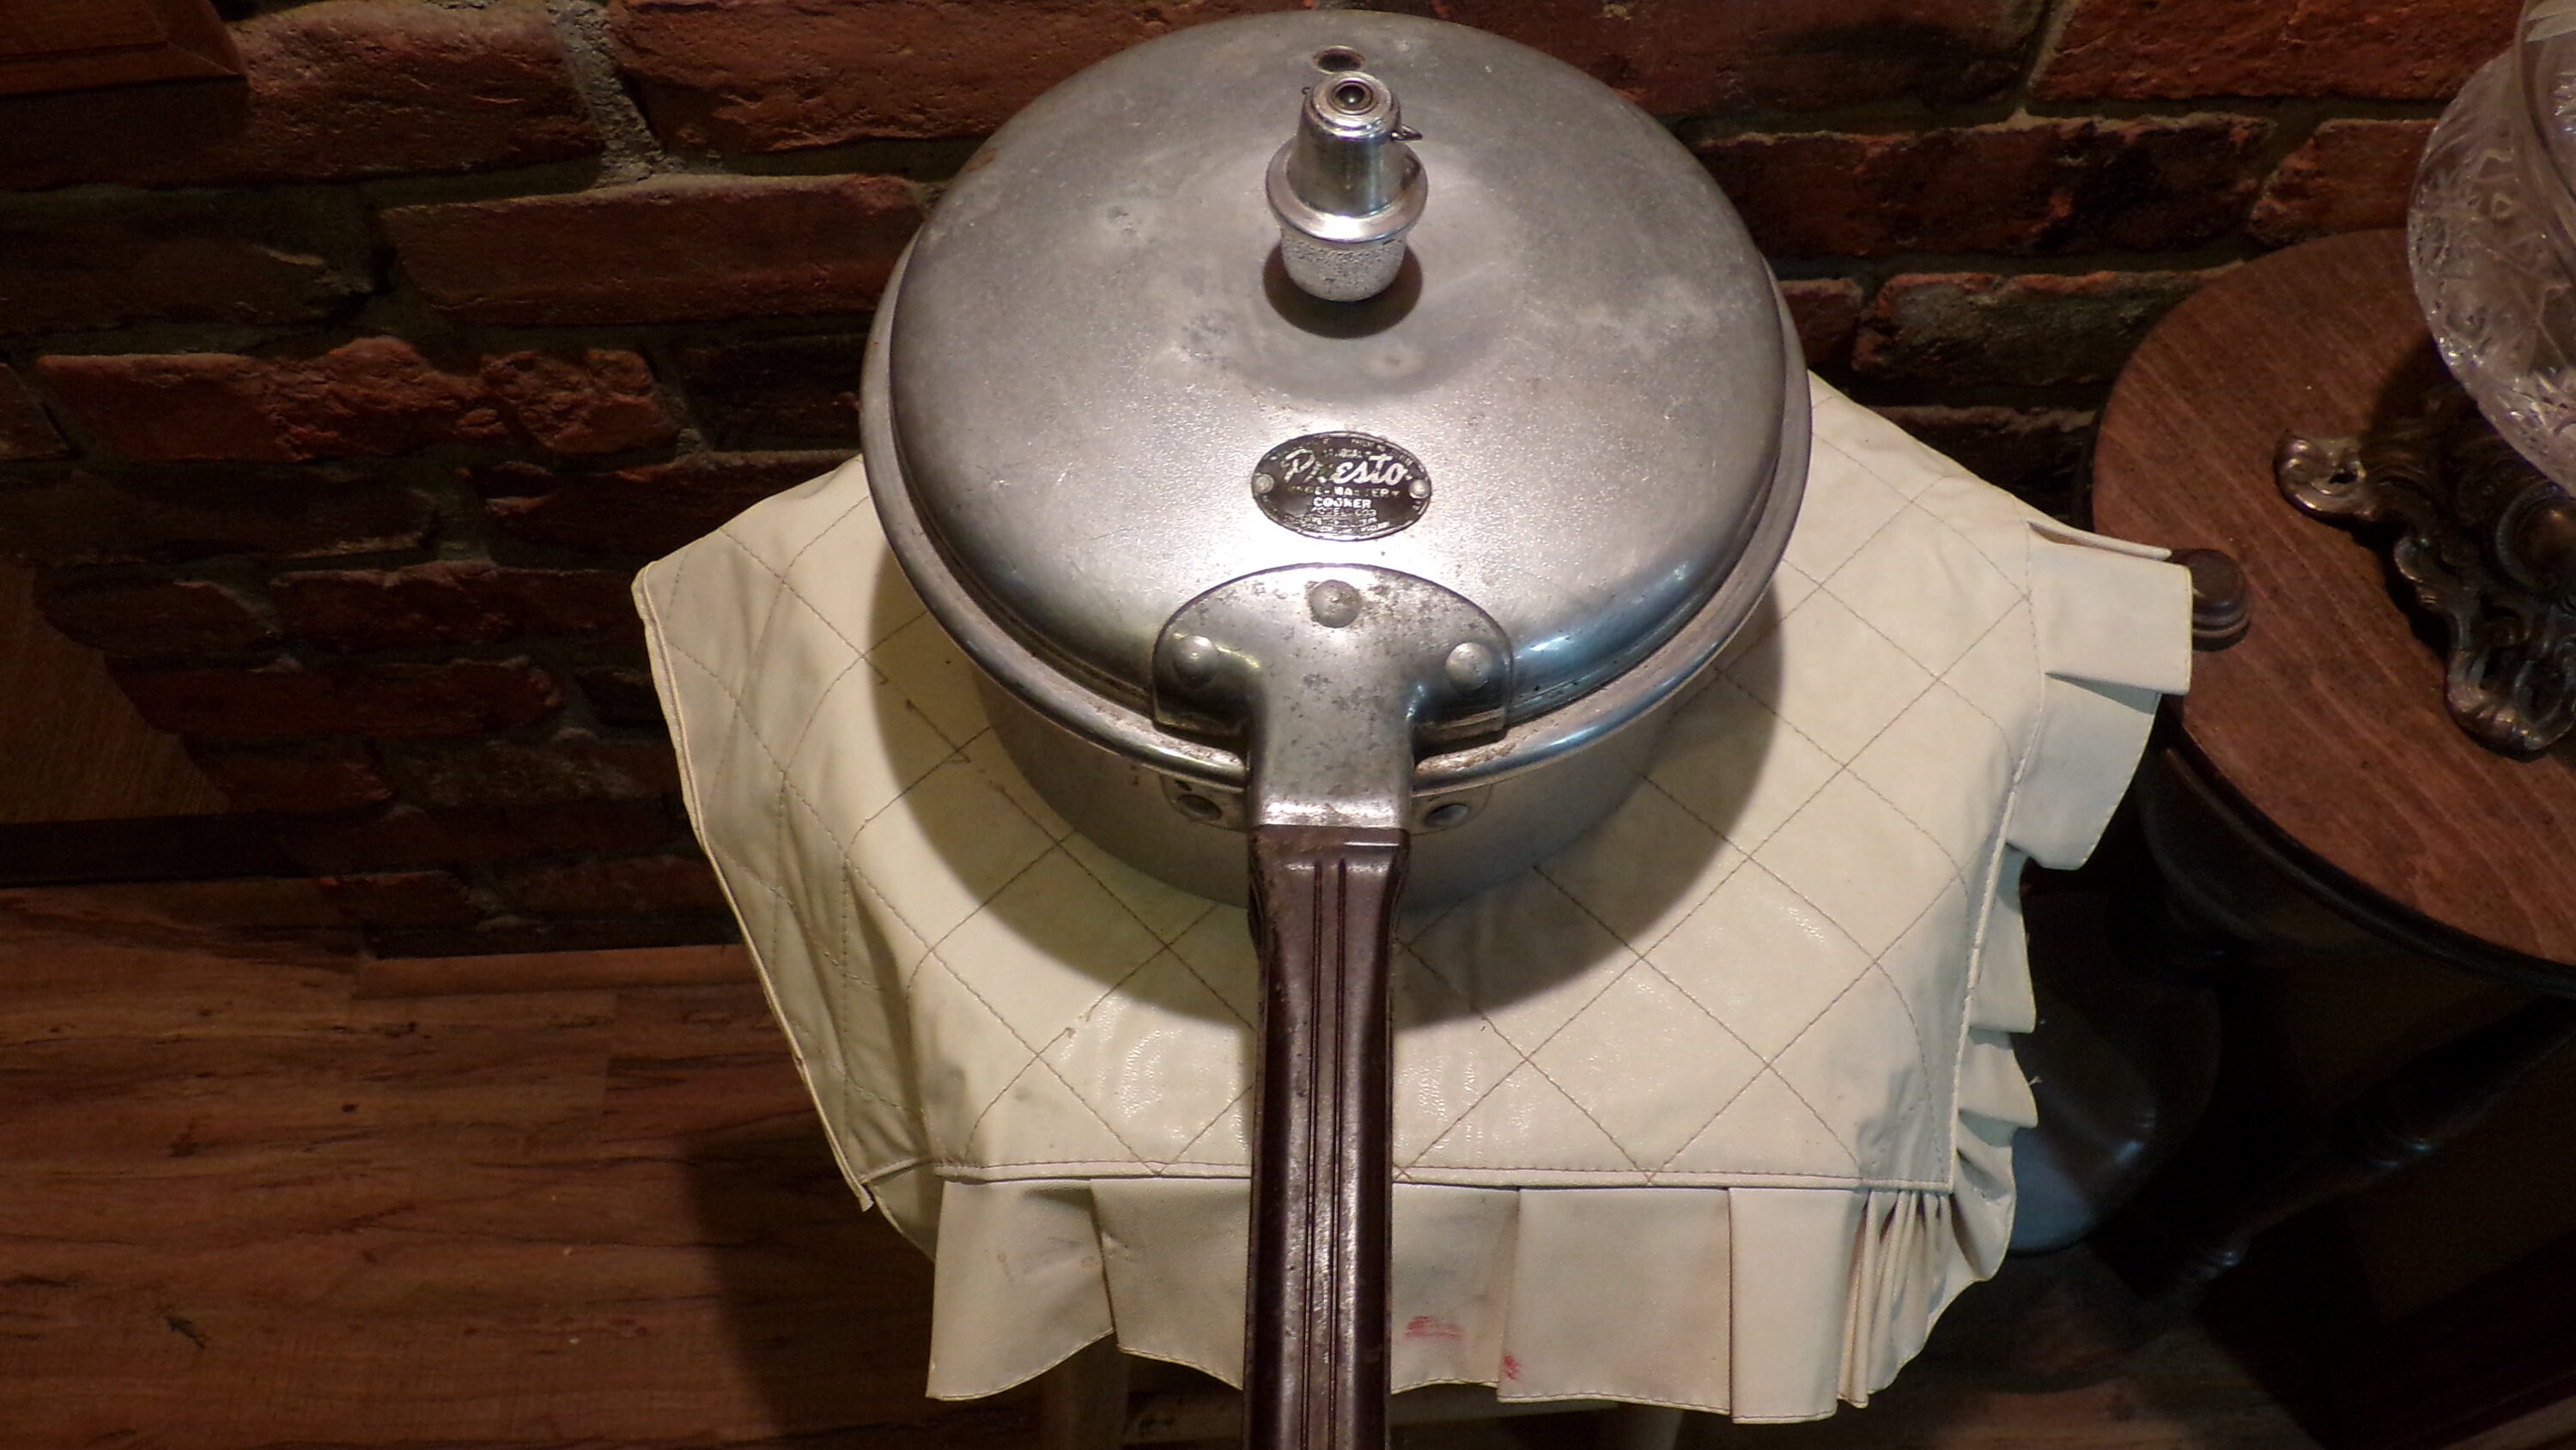 1940s Revere Ware Copper Clad 4 Quart Pressure Cooker